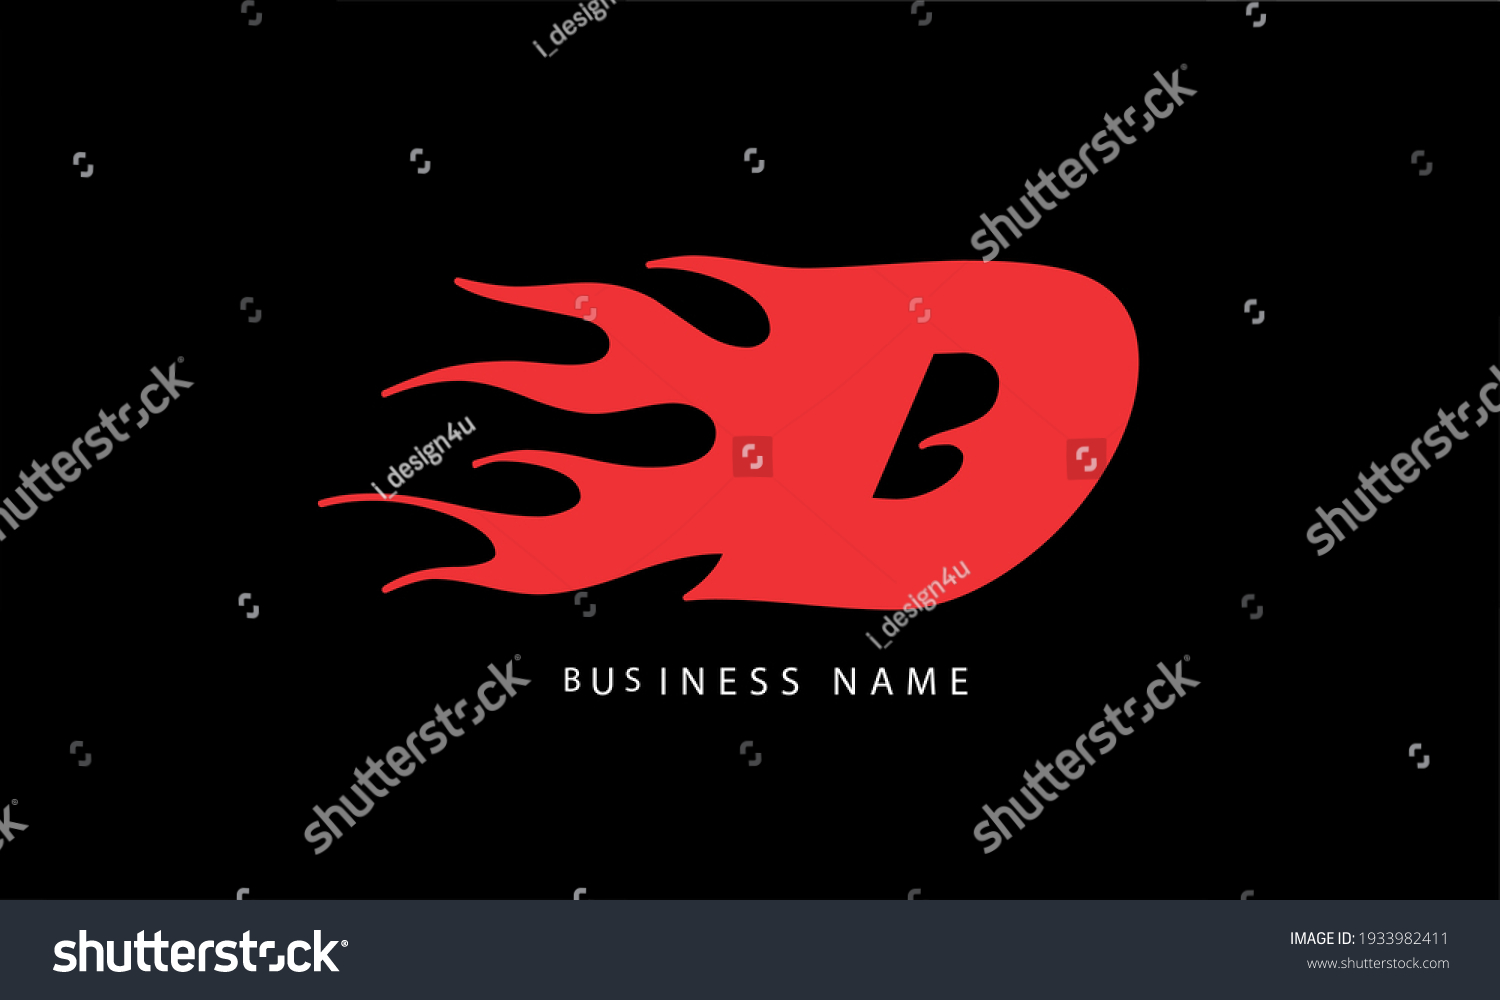 1 Dfire symbol Images, Stock Photos & Vectors | Shutterstock